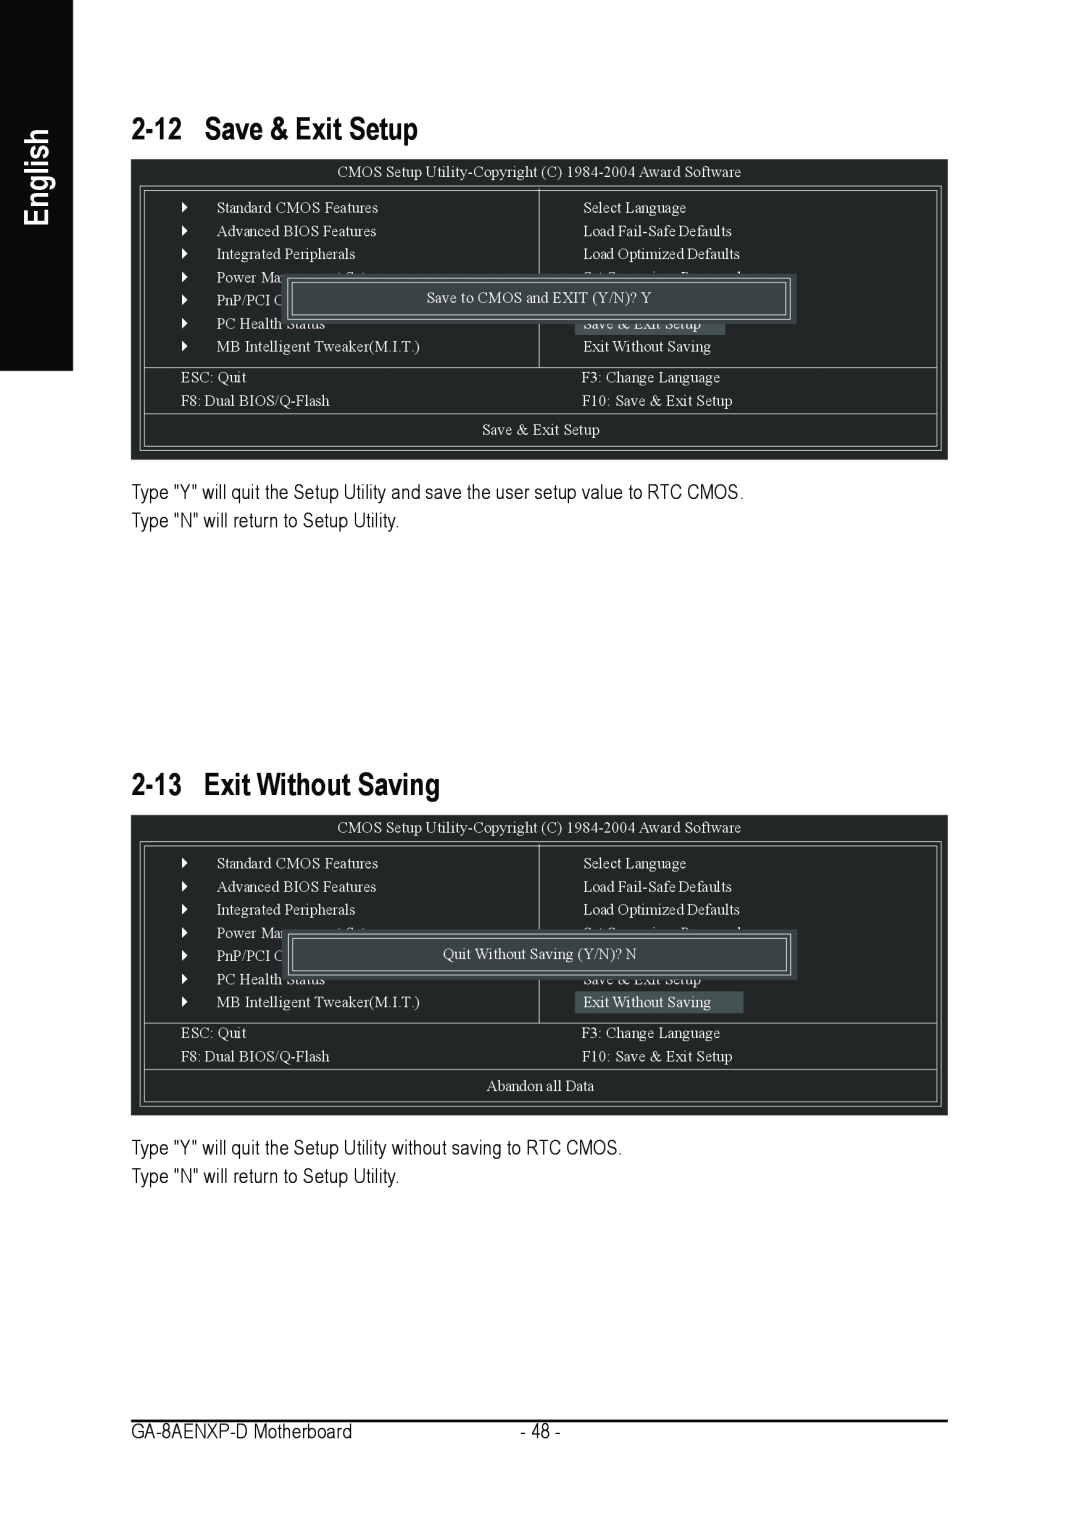 Gigabyte GA-8AENXP-D user manual Save & Exit Setup, Exit Without Saving, English 